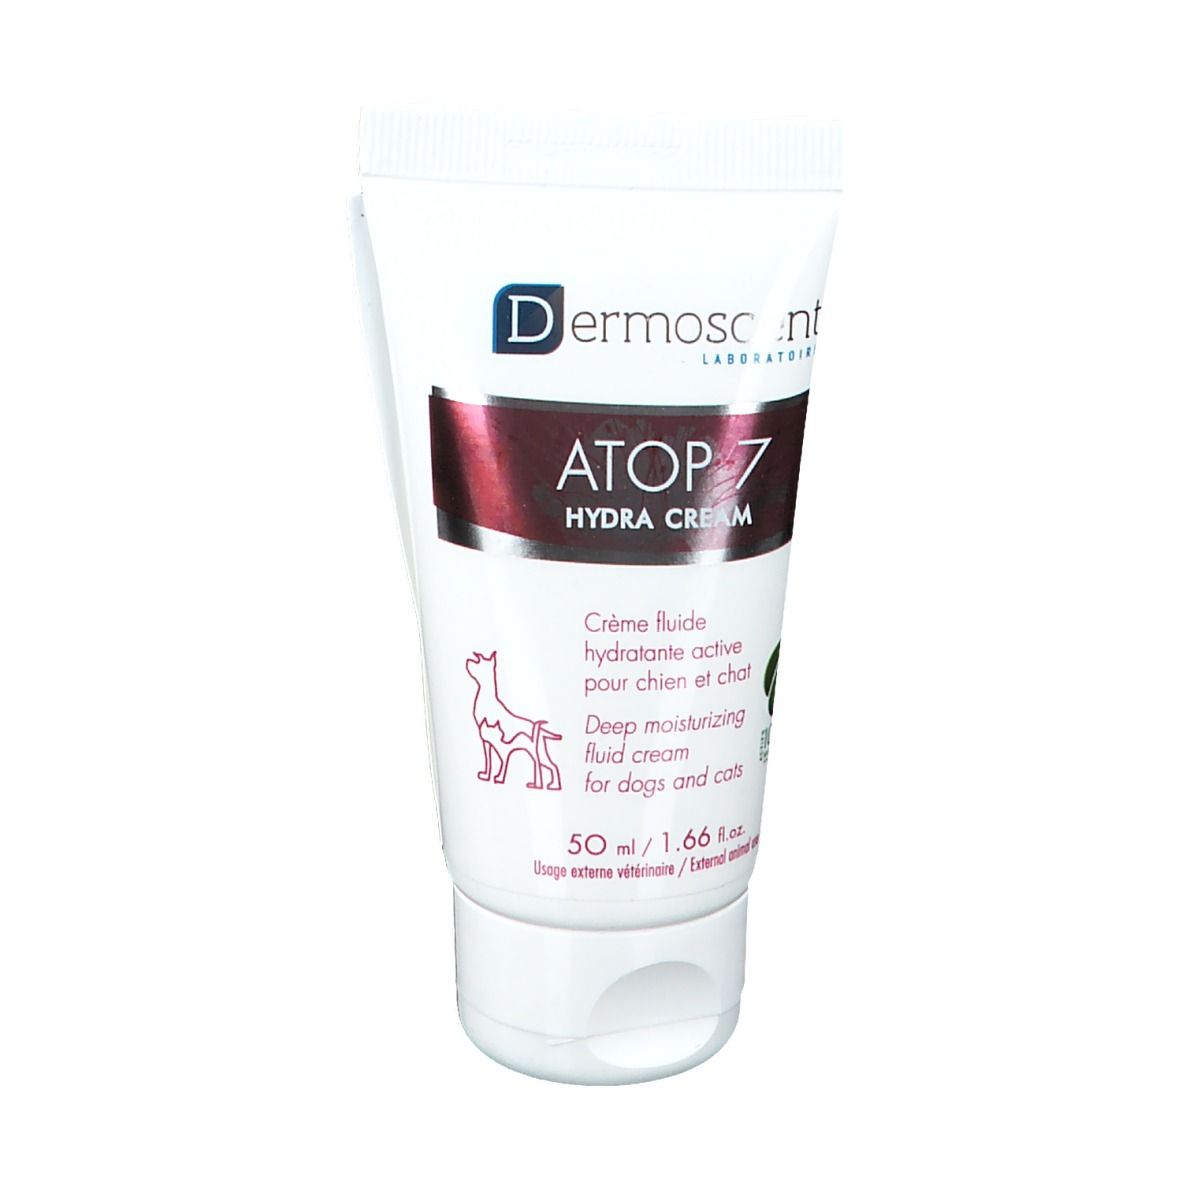 Dermoscent Atop 7® Hydra Cream